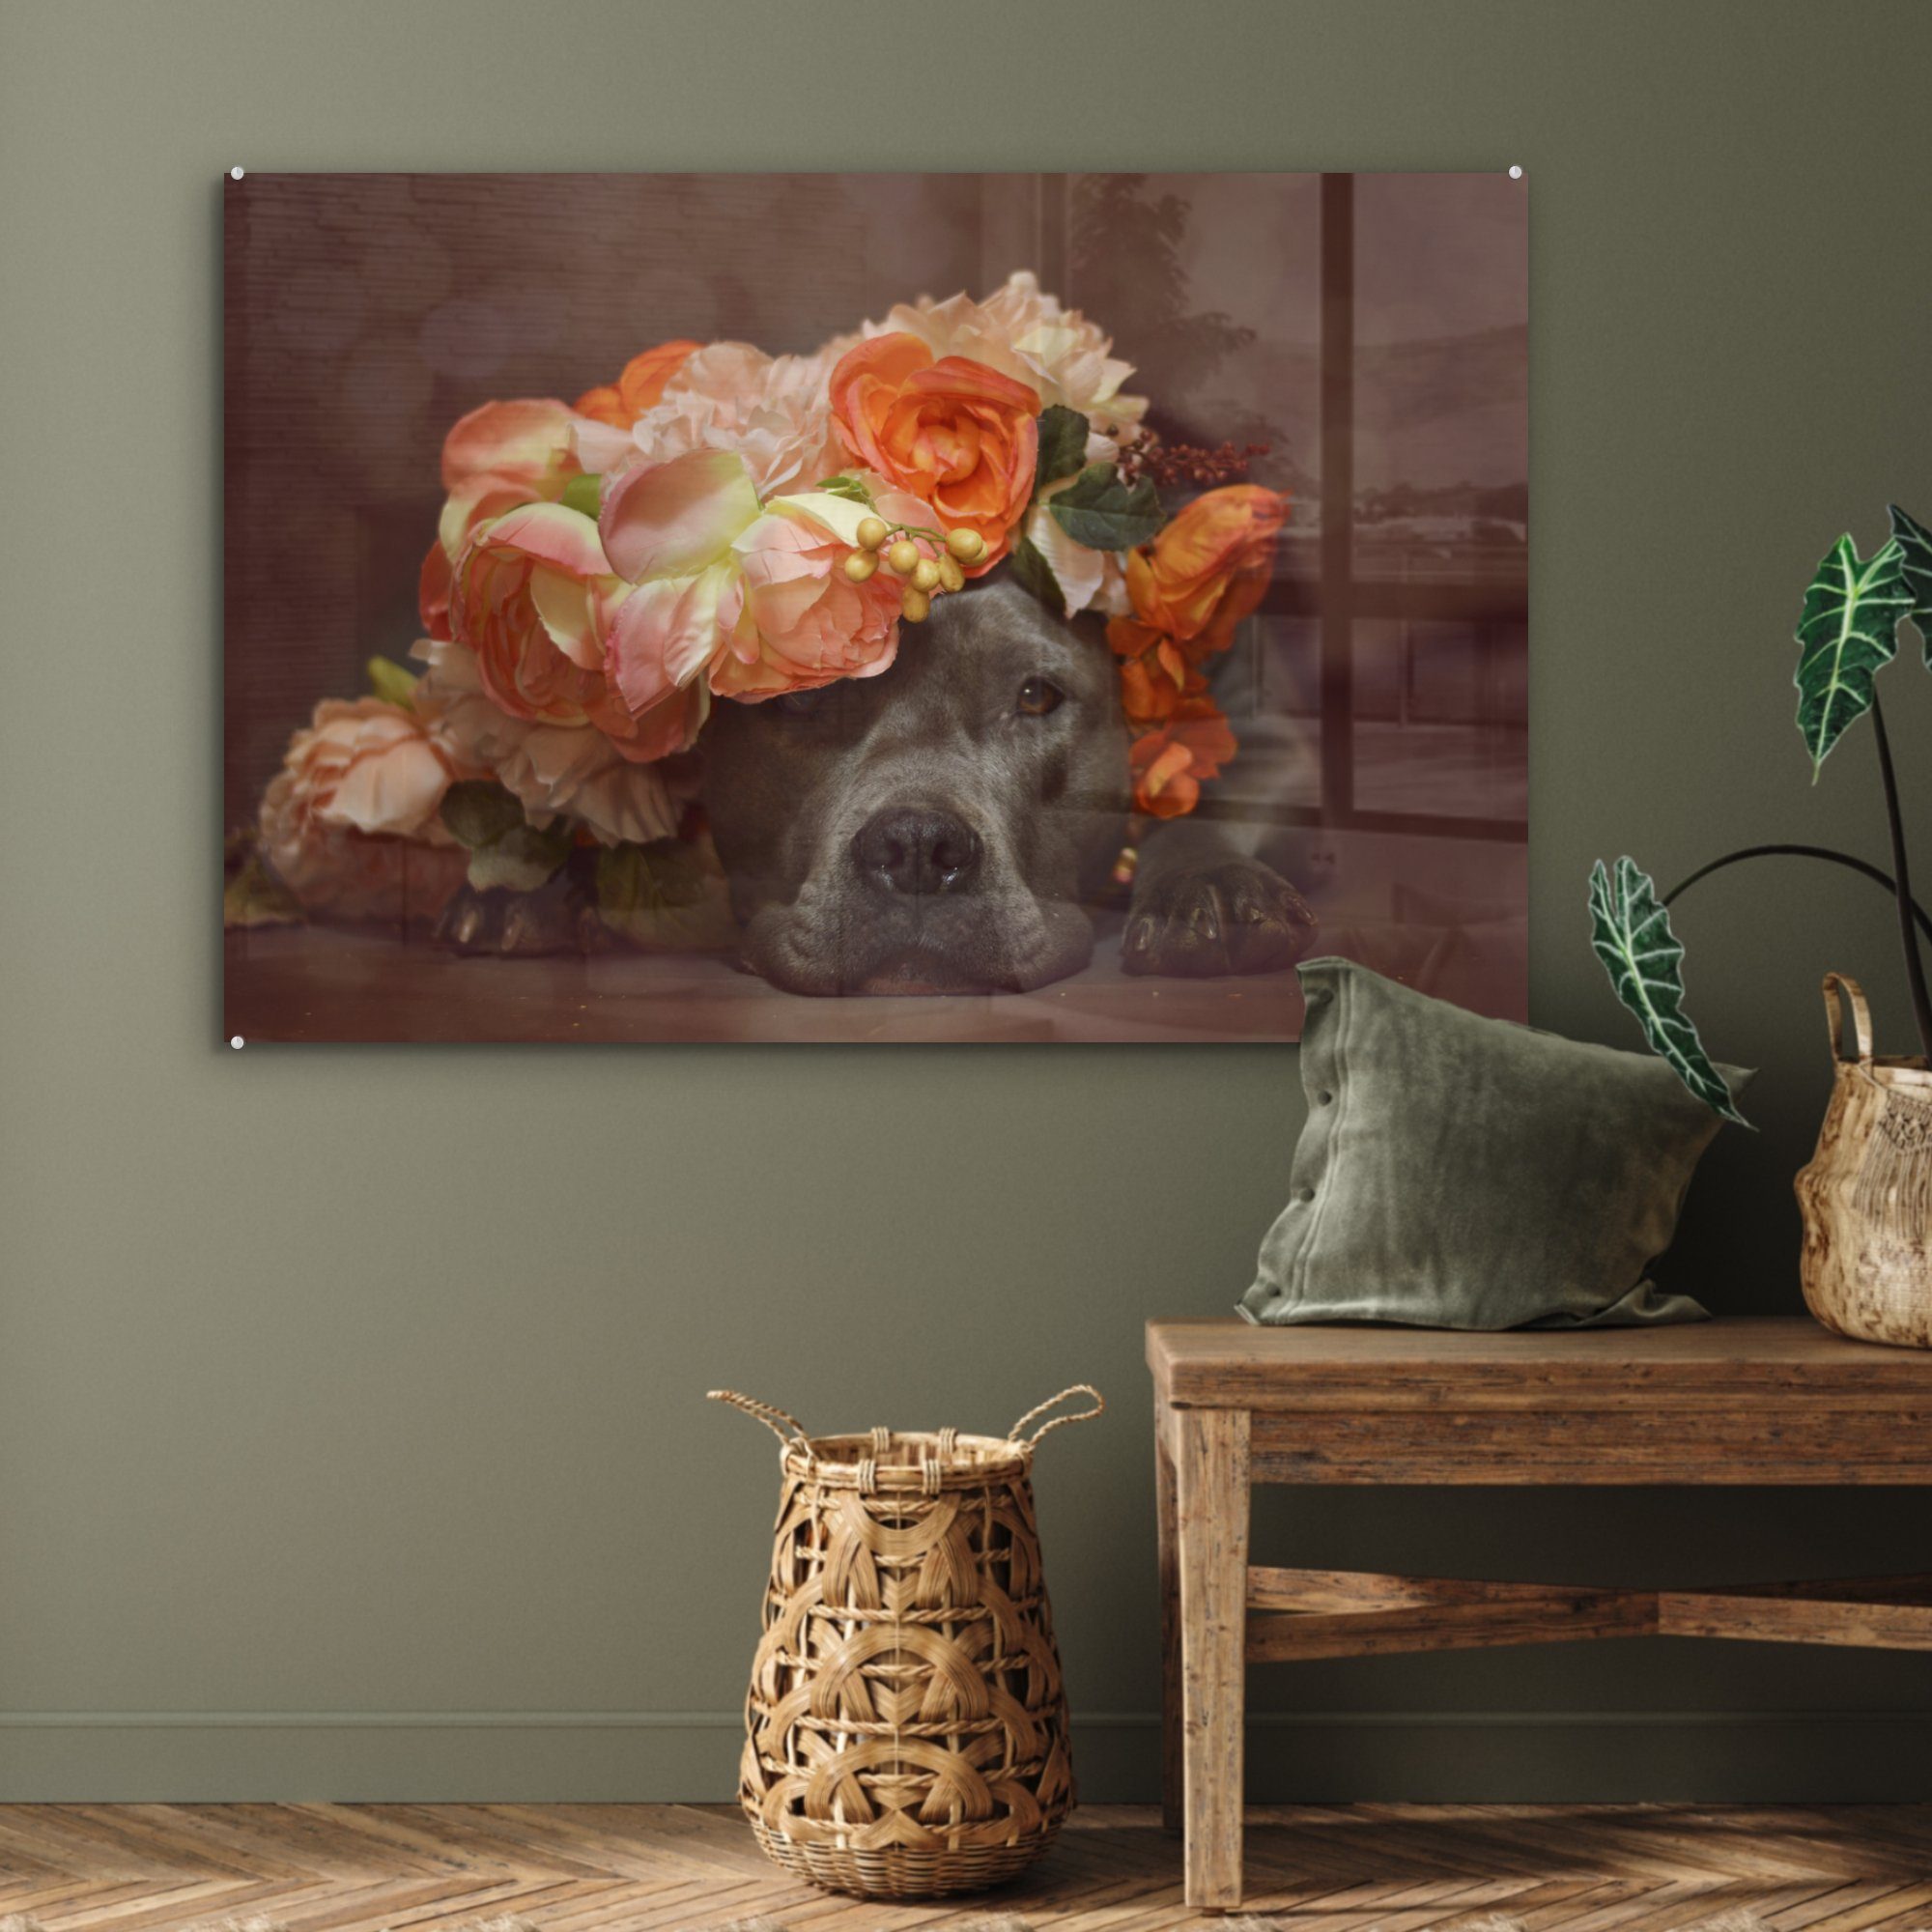 MuchoWow Acrylglasbild Hund Schlafzimmer Wohnzimmer Acrylglasbilder - & St), (1 Pitbull Orange, 